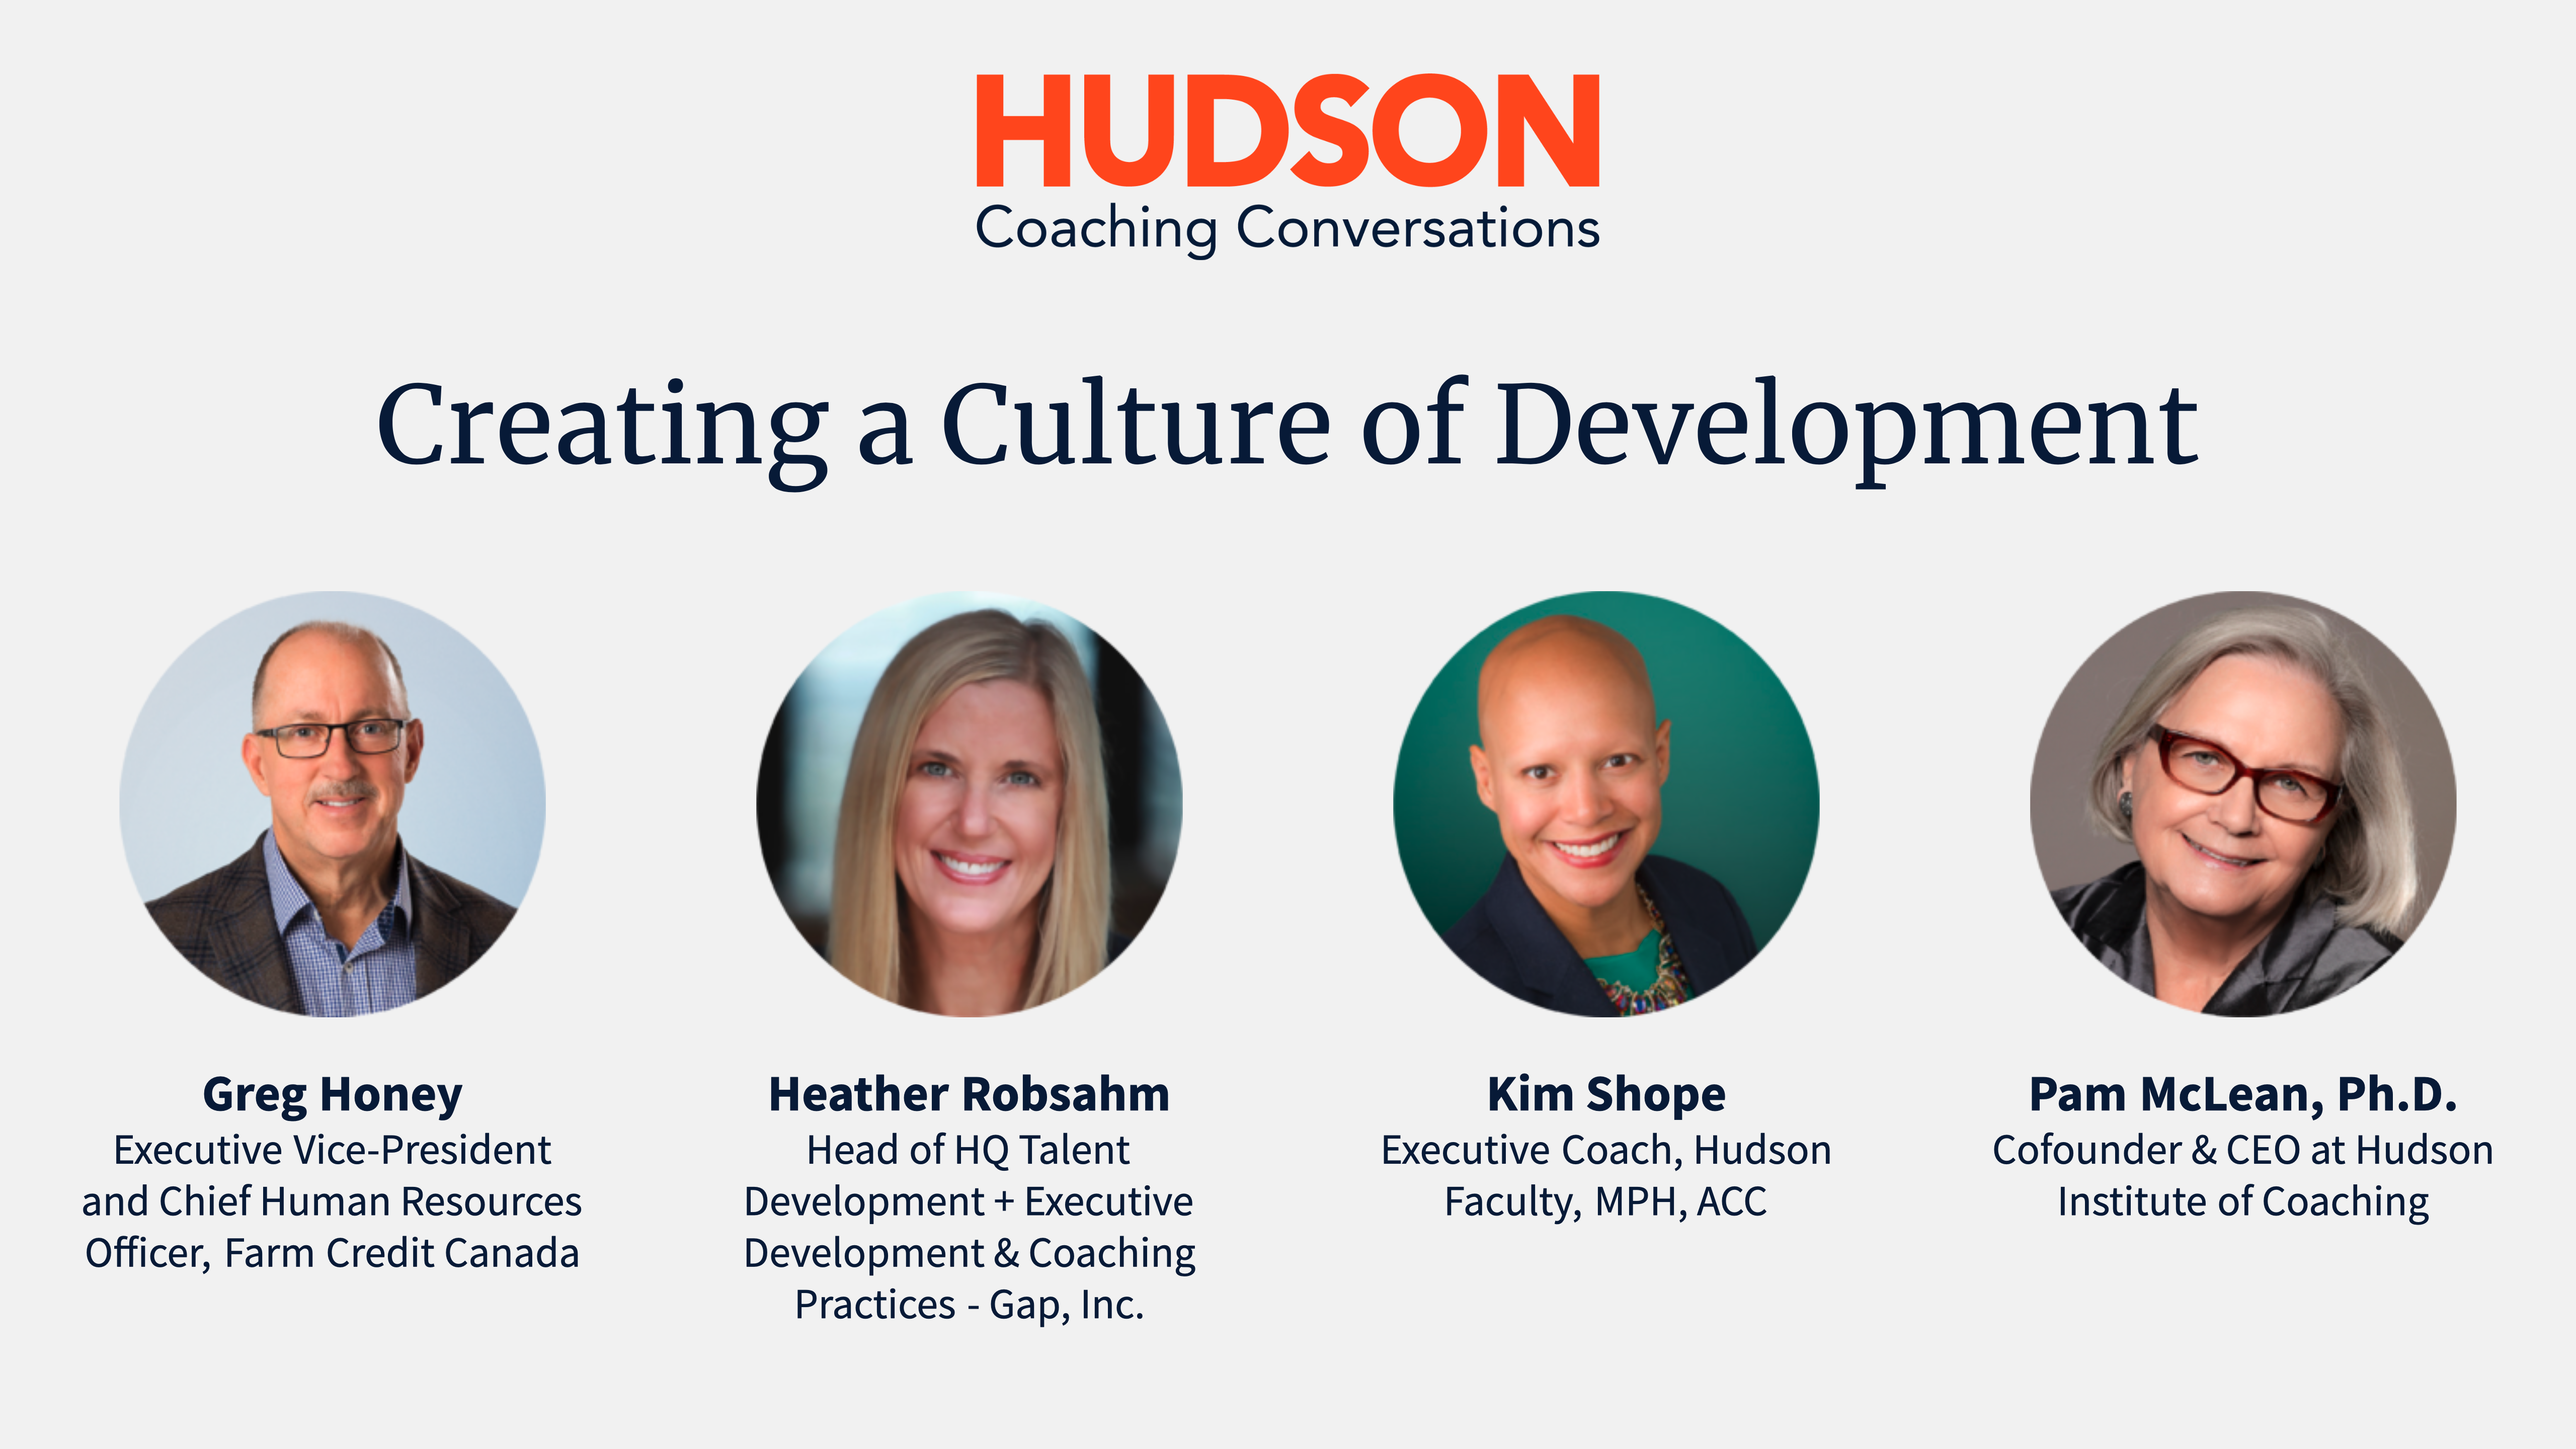 [Video] Hudson Coaching Conversations: Creating a Culture of Development